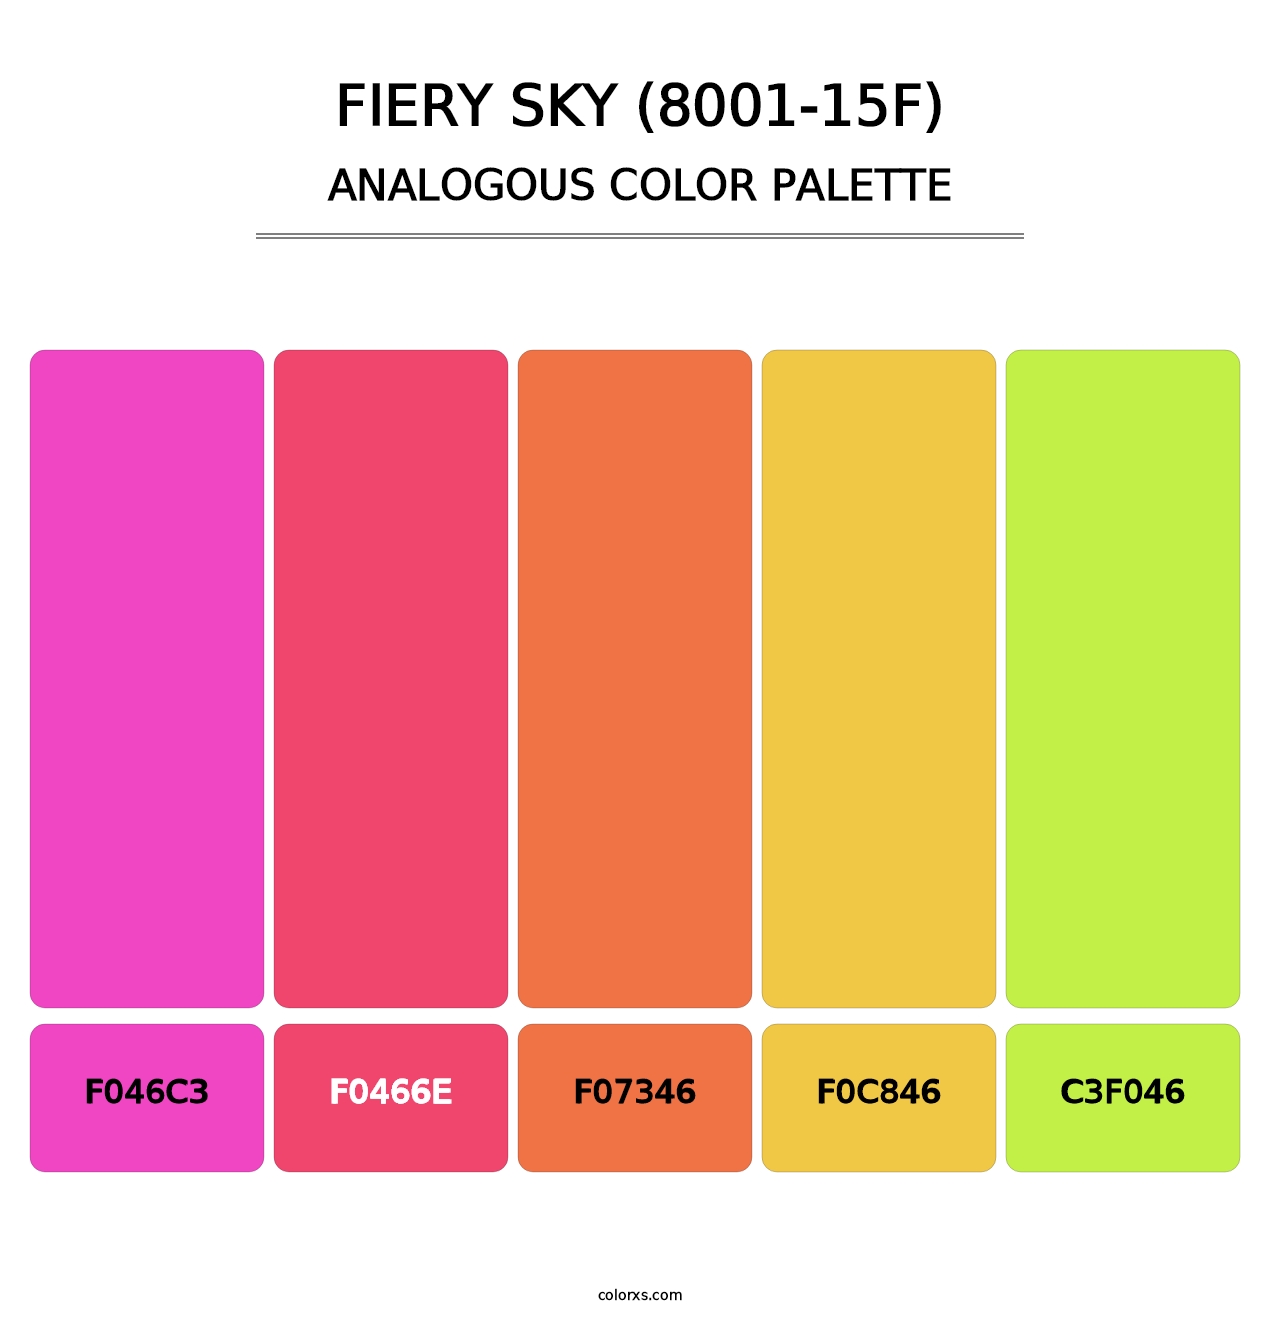 Fiery Sky (8001-15F) - Analogous Color Palette